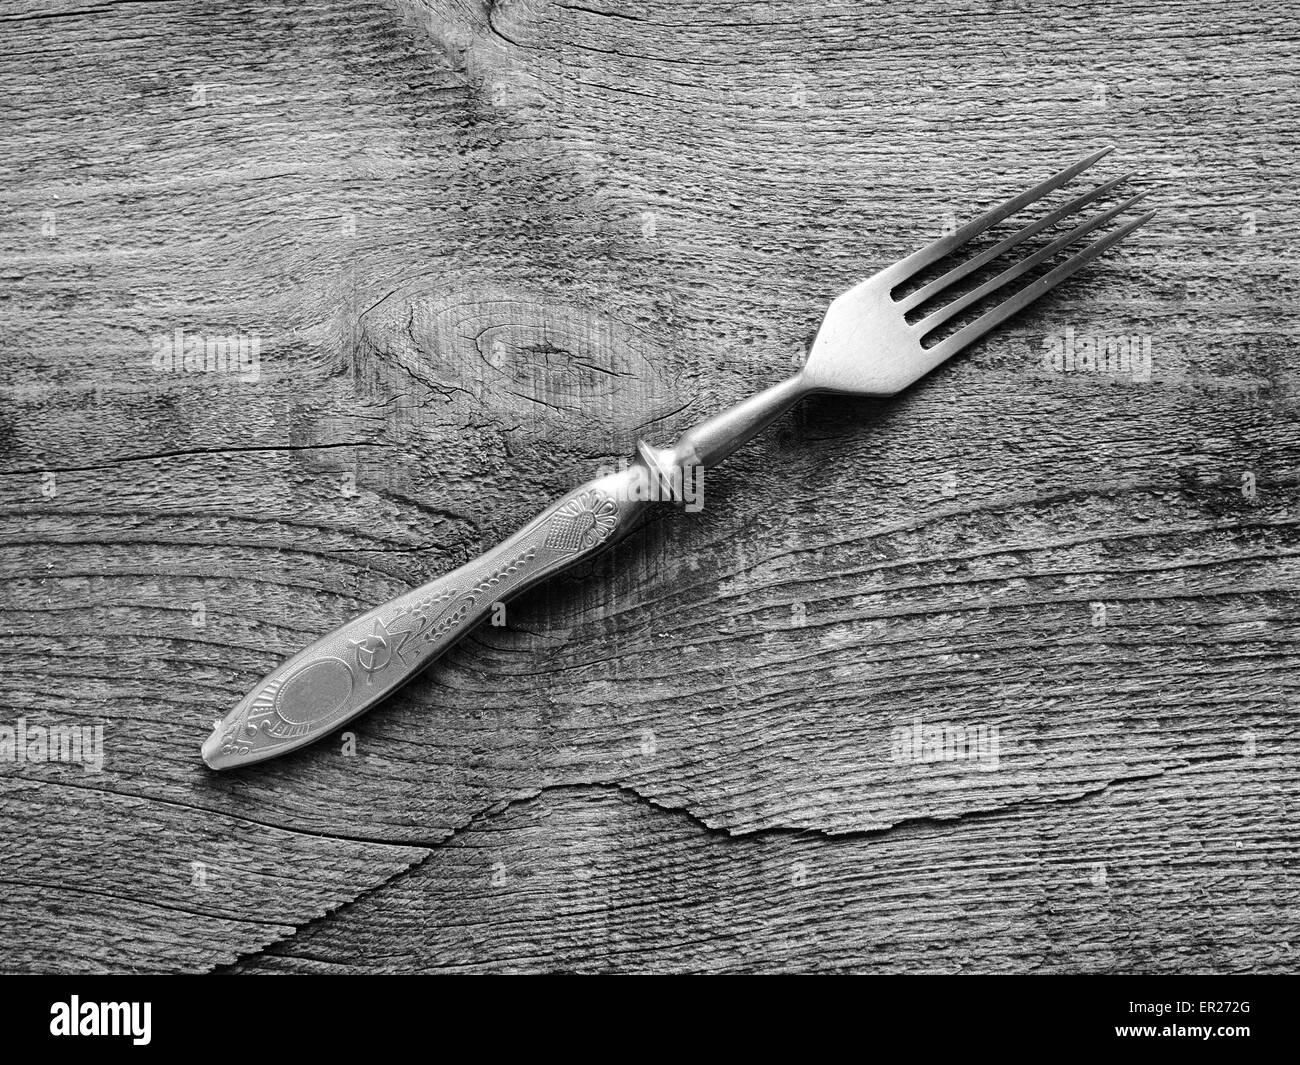 May 24, 2015 - Dining fork on raw wooden background. Grunge style. (Credit Image: © Igor Golovniov/ZUMA Wire/ZUMAPRESS.com) Stock Photo